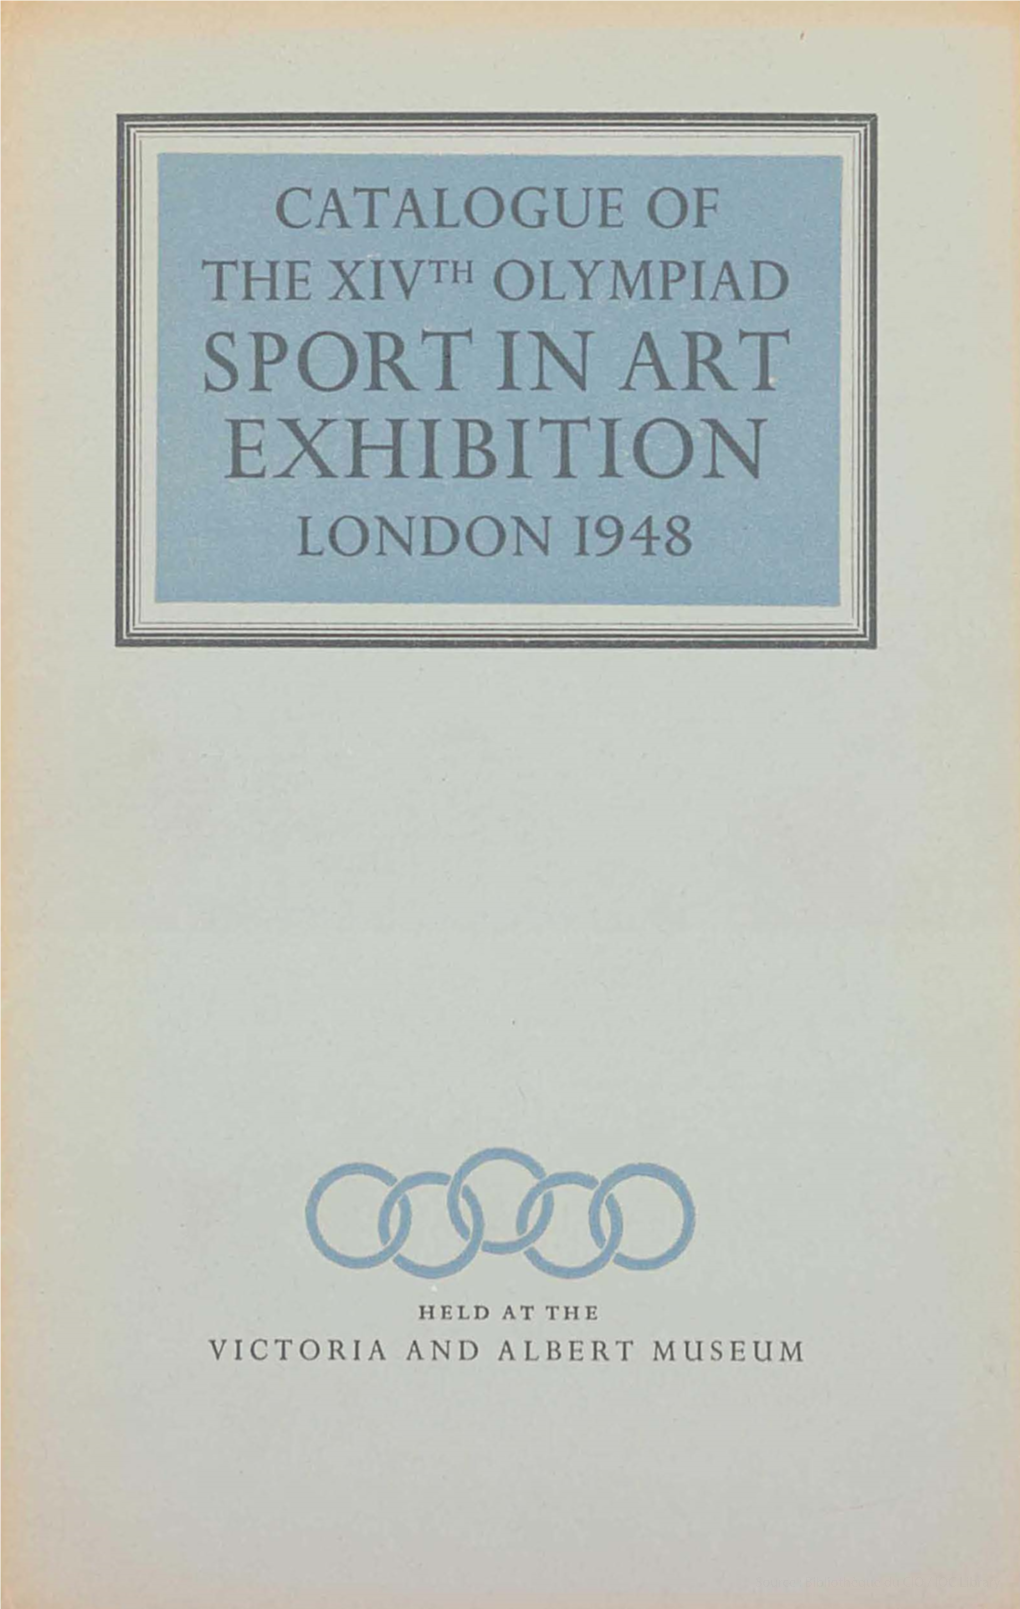 Exhibition London 1948